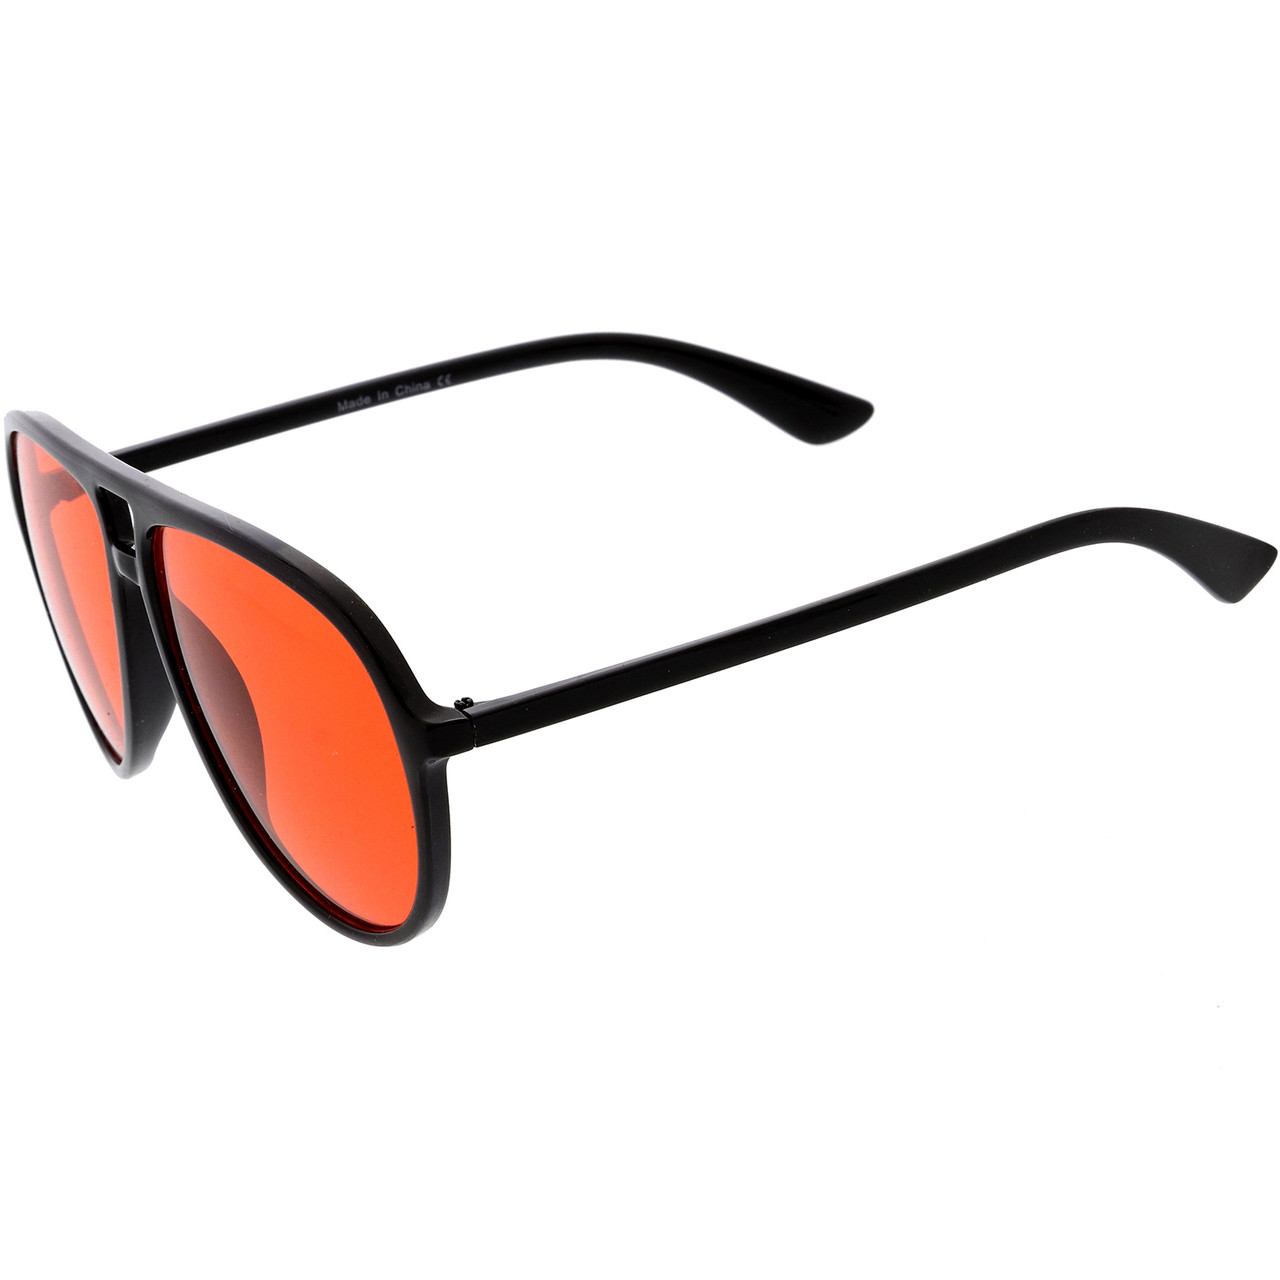 Retro Lens Color Classic Aviator 55mm Tinted Inspired 80s Sunglasses